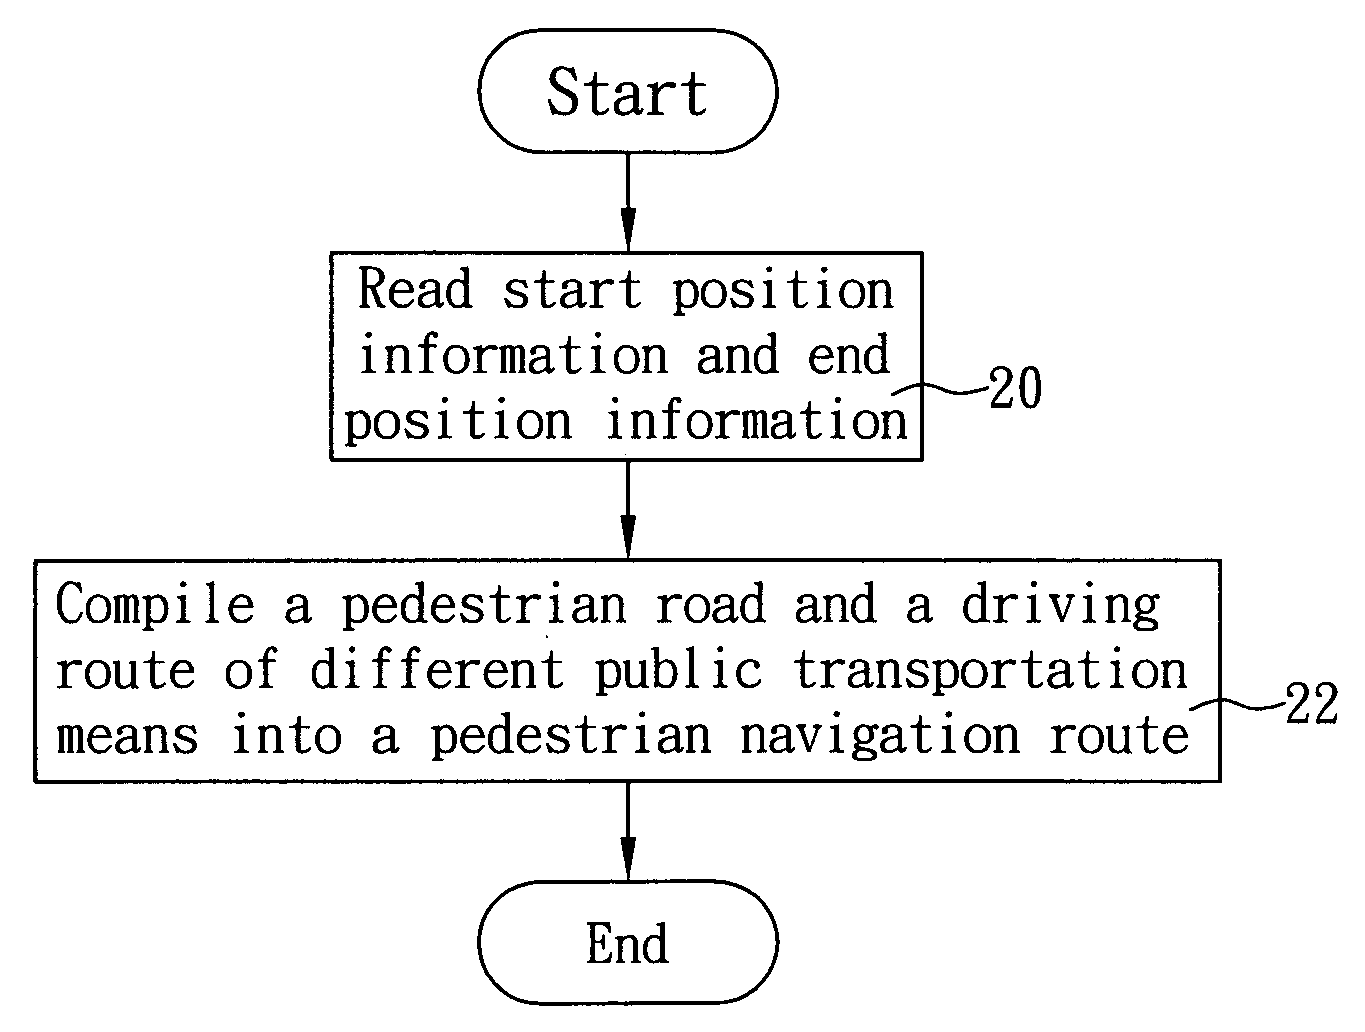 Method of planning pedestrian navigation route